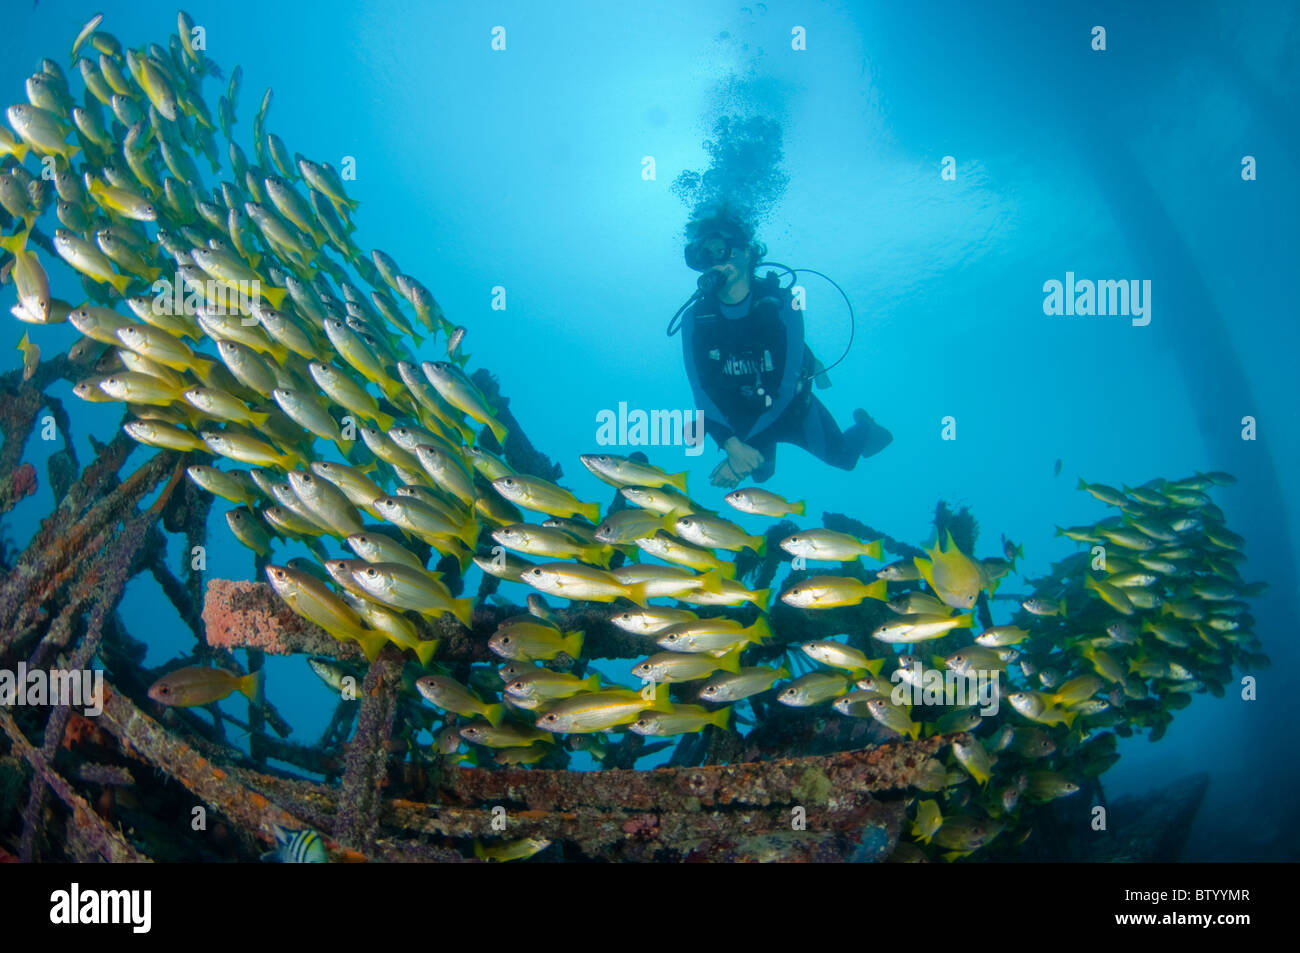 Diver and school of Bigeye Snappers, Lutjanus lutjanus, beneath the Seaventures Dive Resort platform, Mabul, Sabah, Malaysia Stock Photo